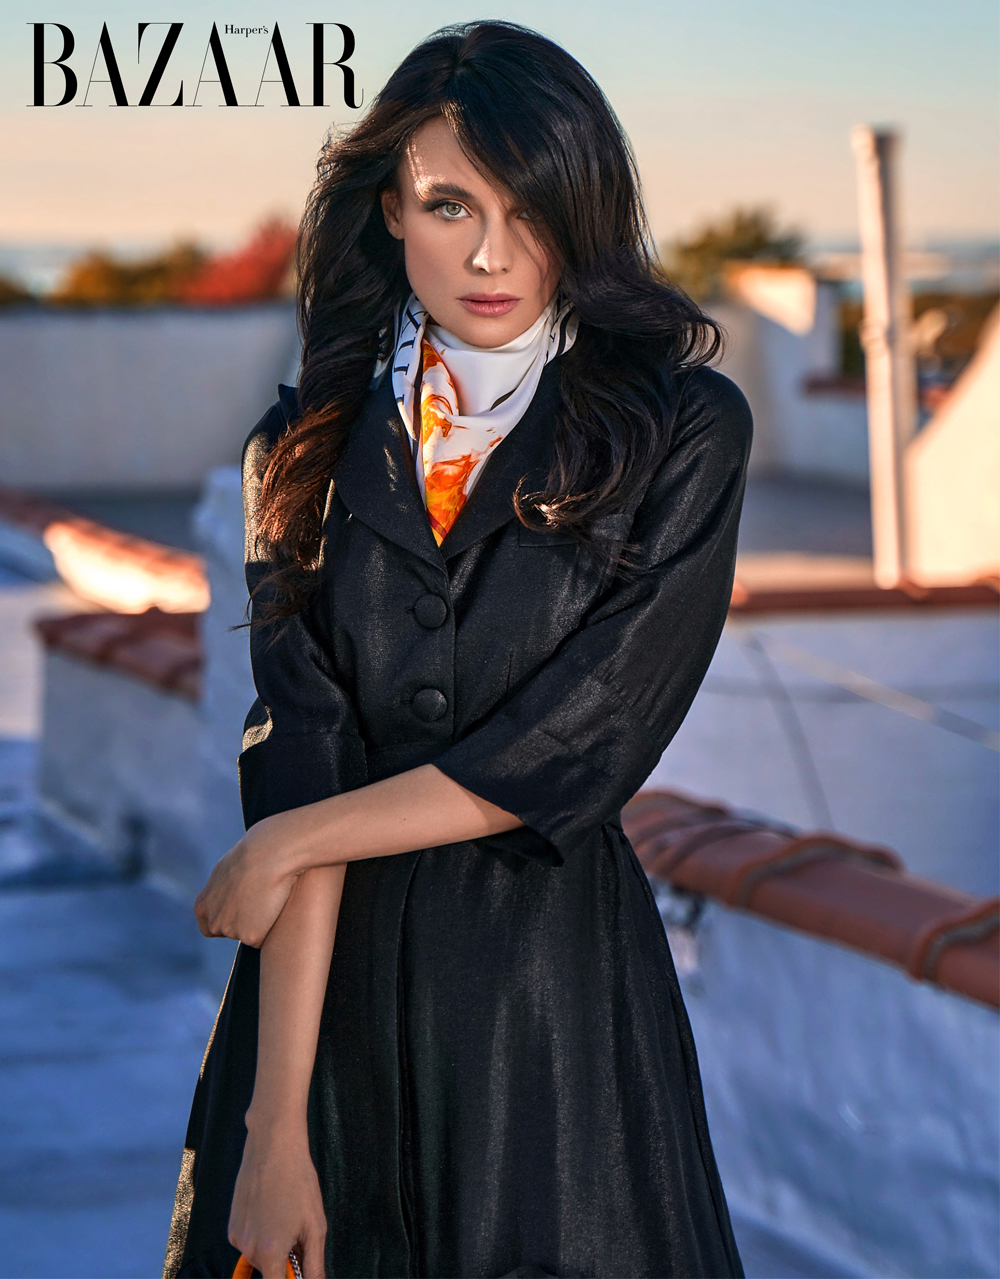 Photographer Nestor Correa's “Urban Class” fashion editorial features model Kira Dikhtyar 2